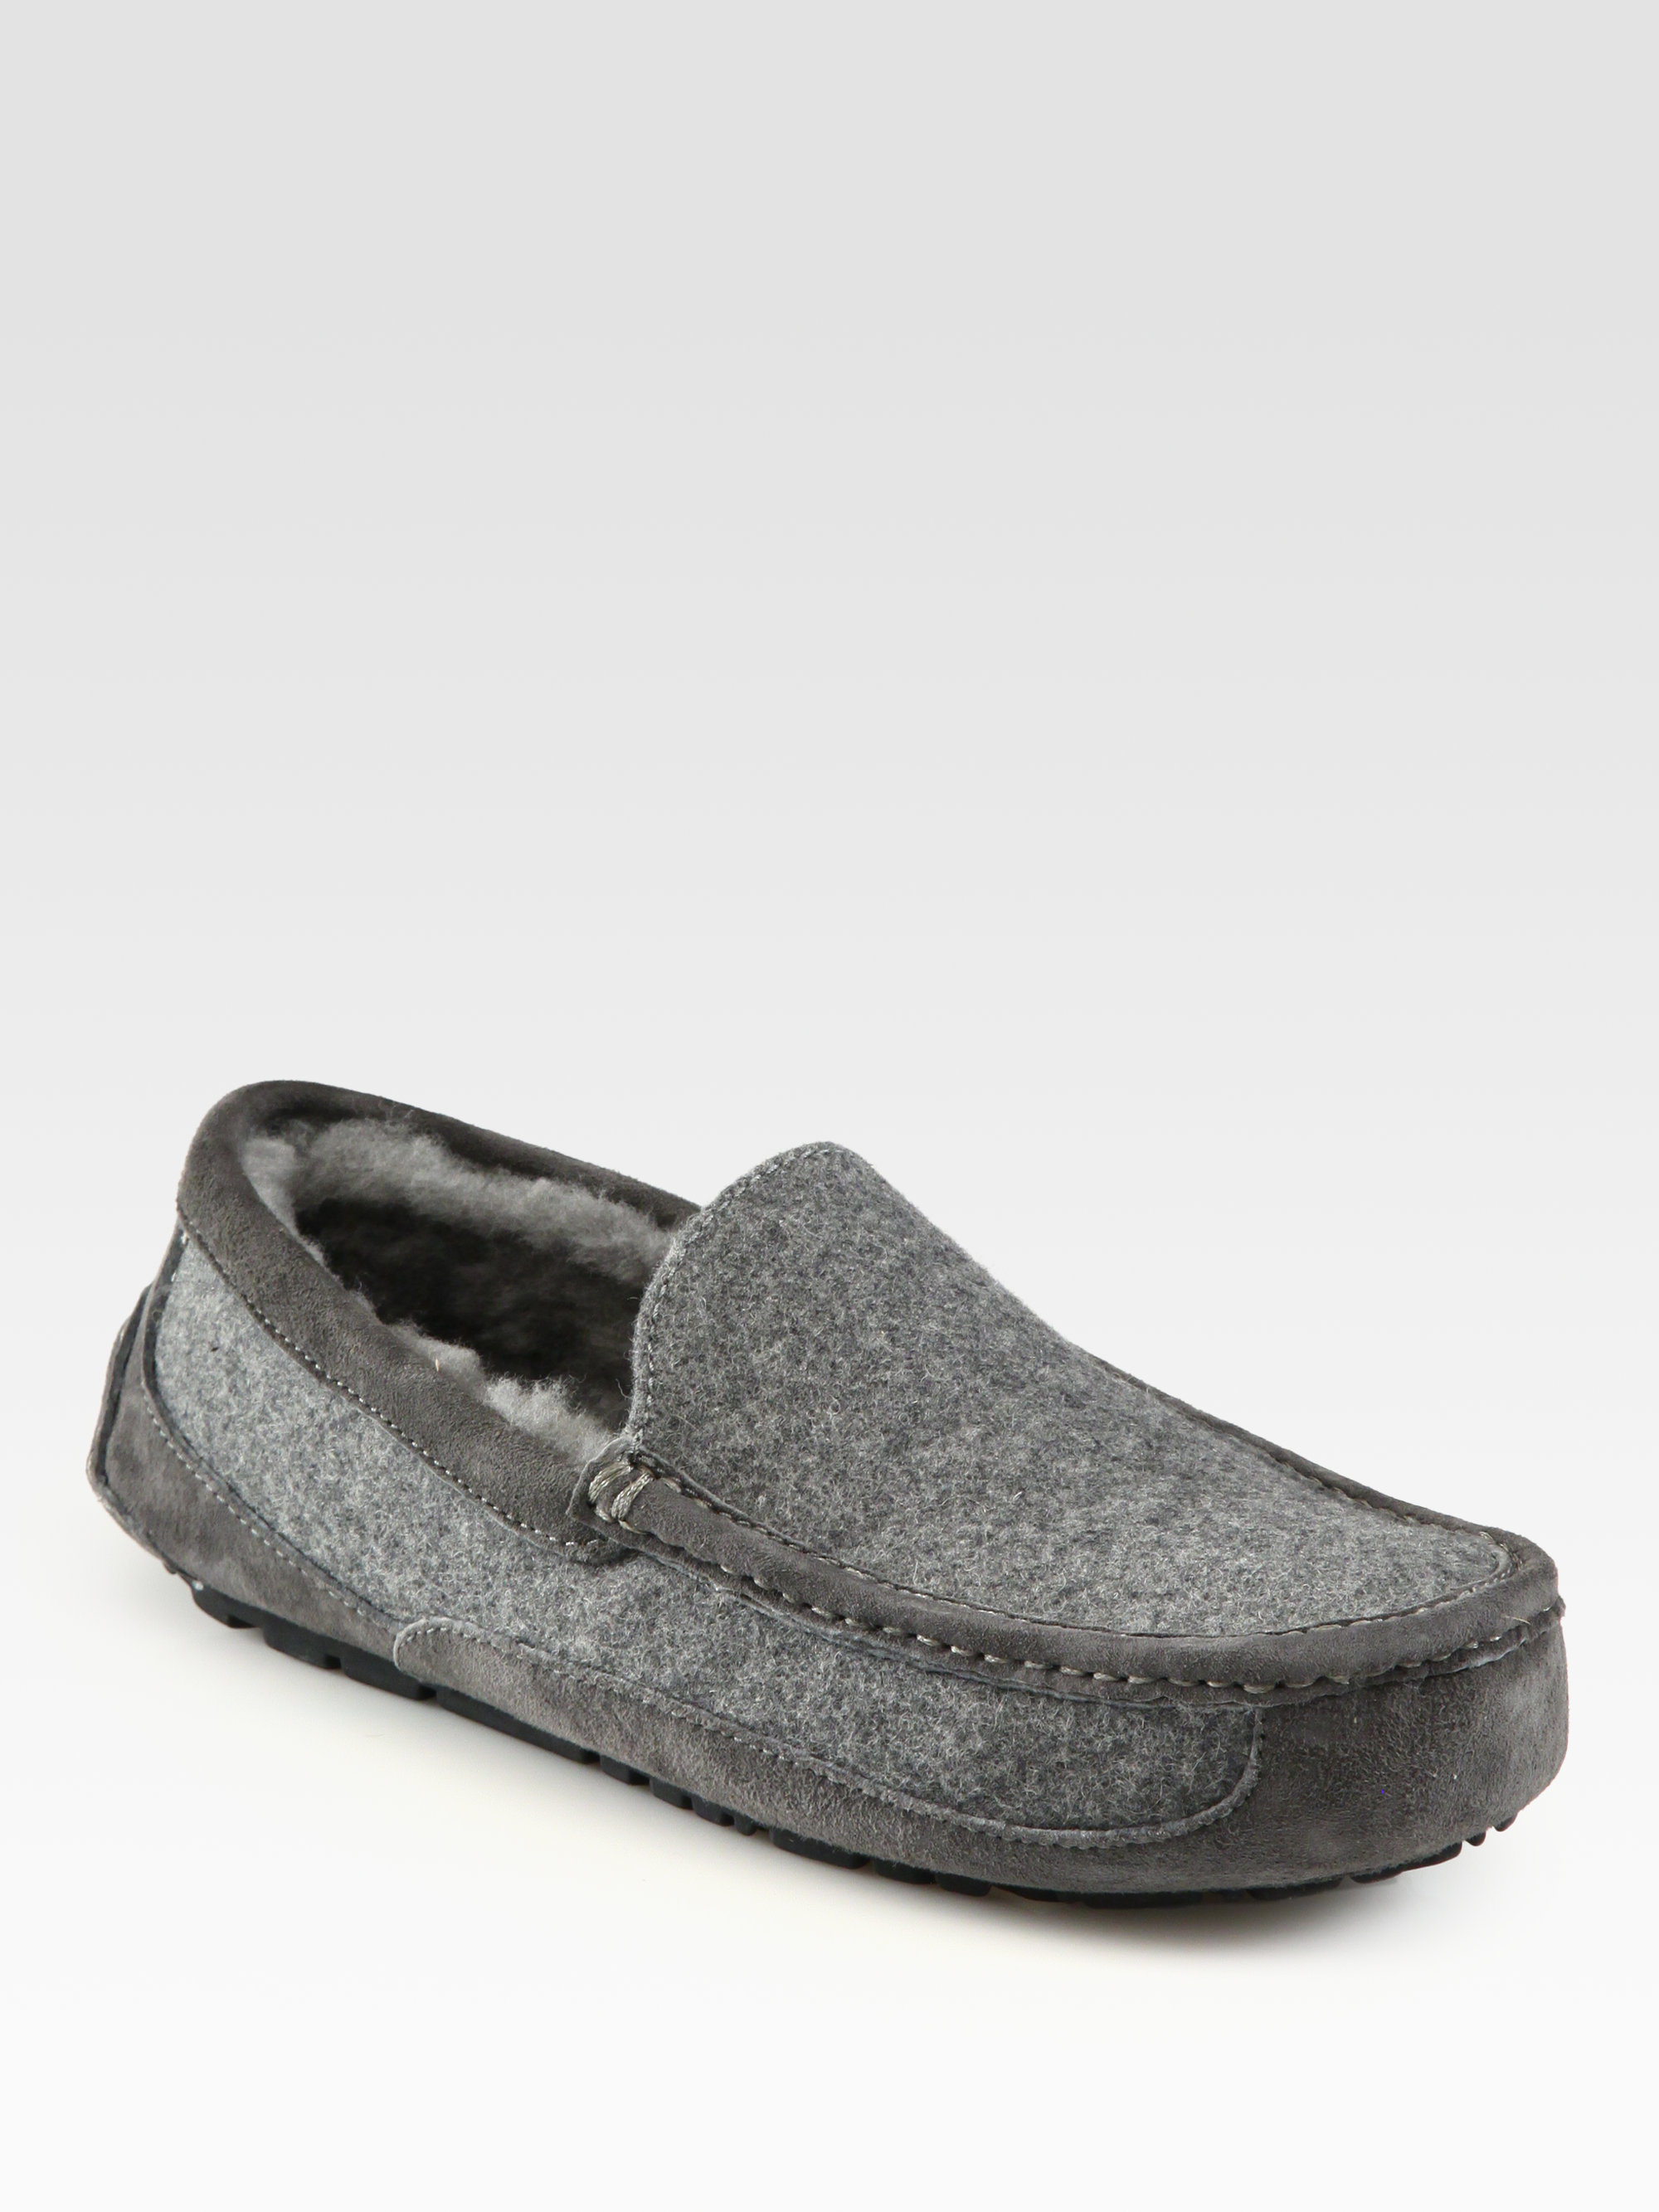 mens grey slippers